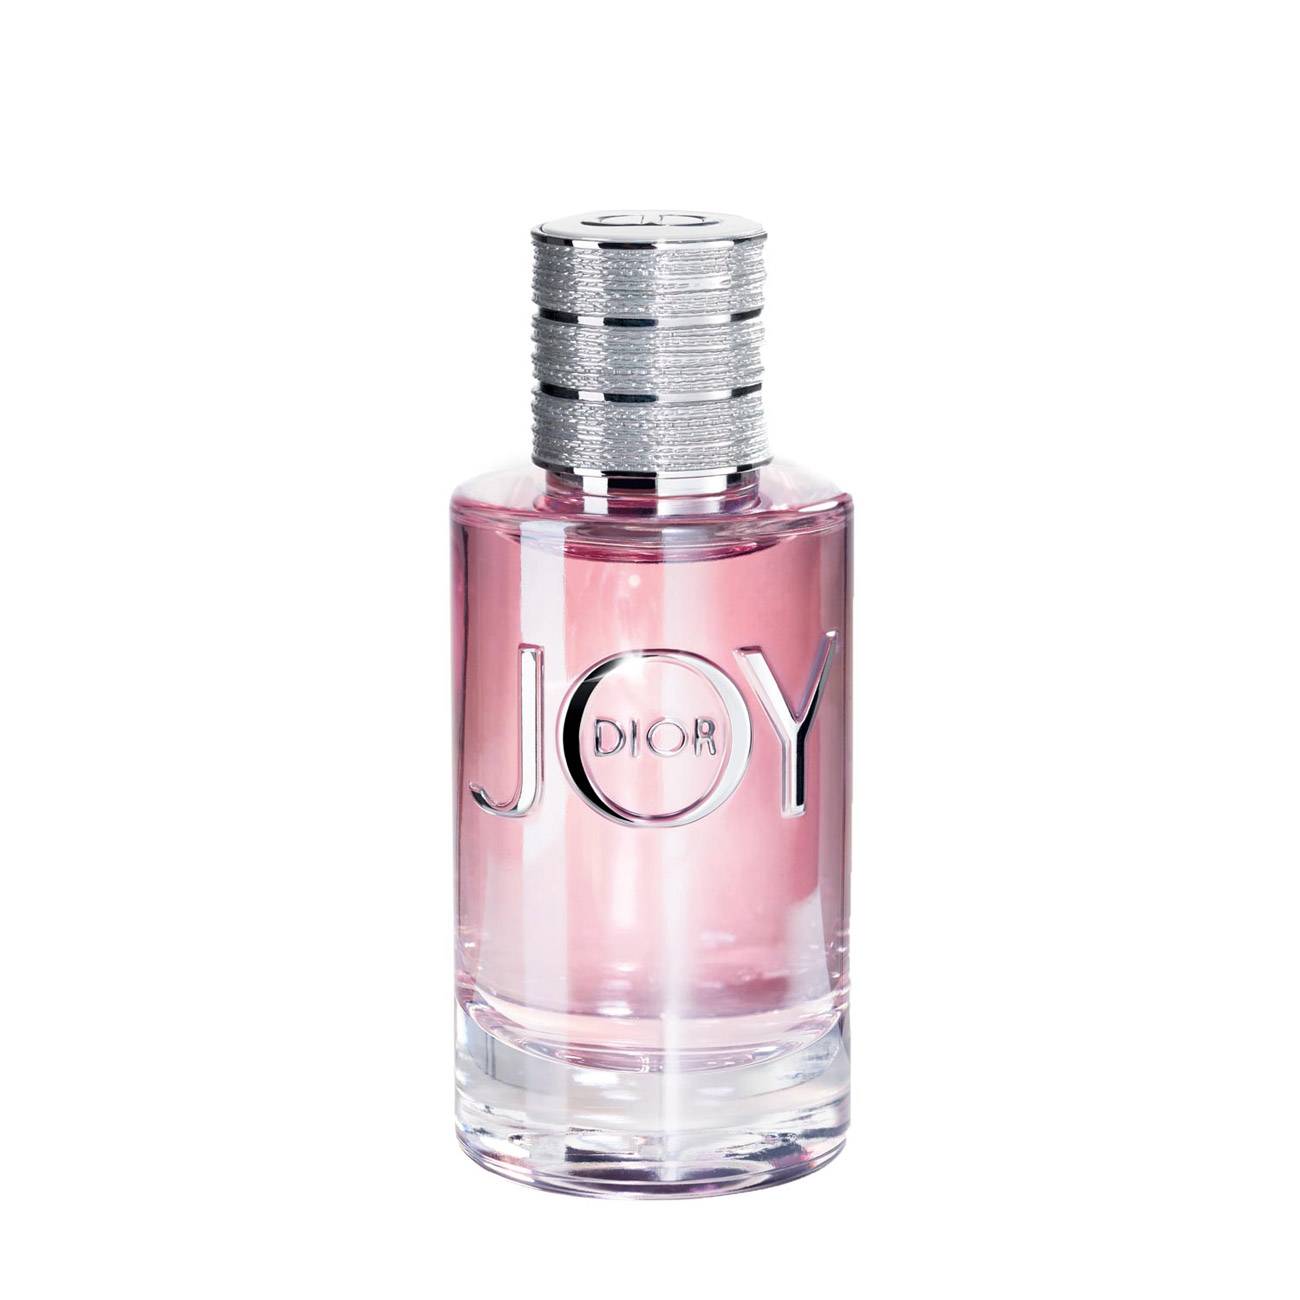 Apa de Parfum Dior JOY 90ml cu comanda online